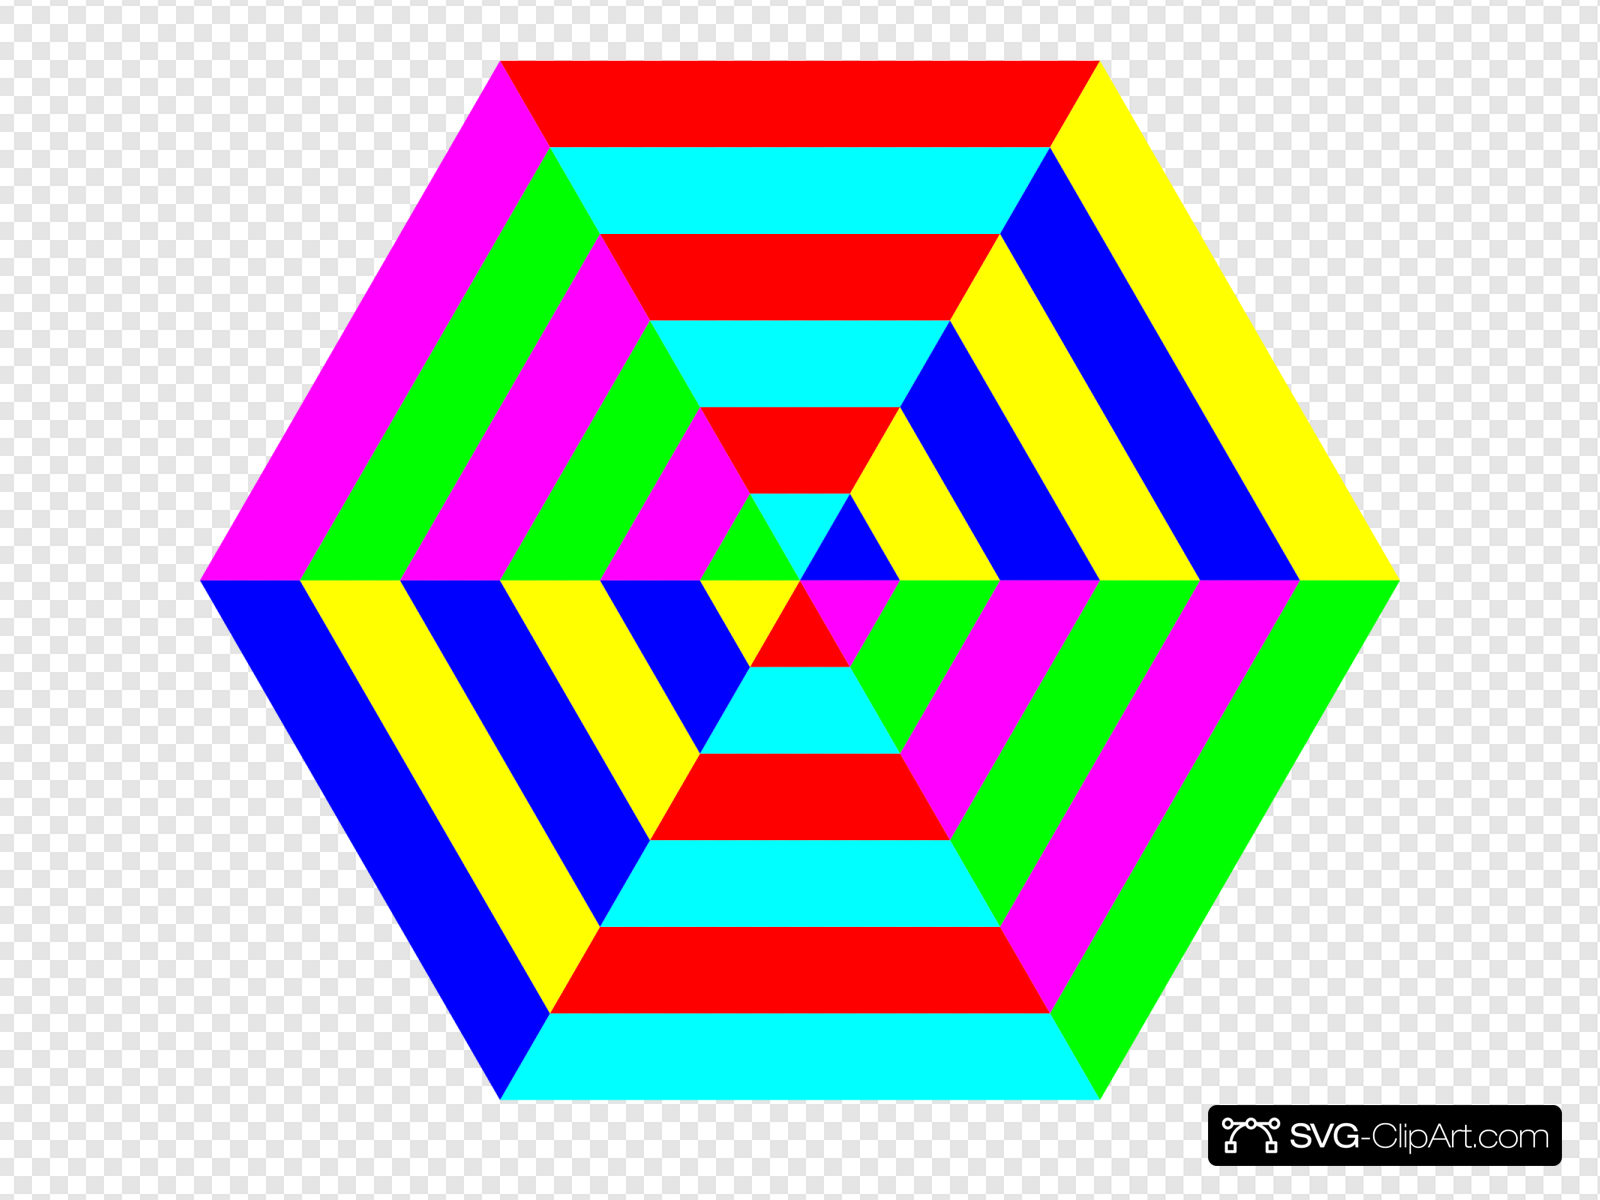 Hexagon Triangle Rainbow Clip art, Icon and SVG